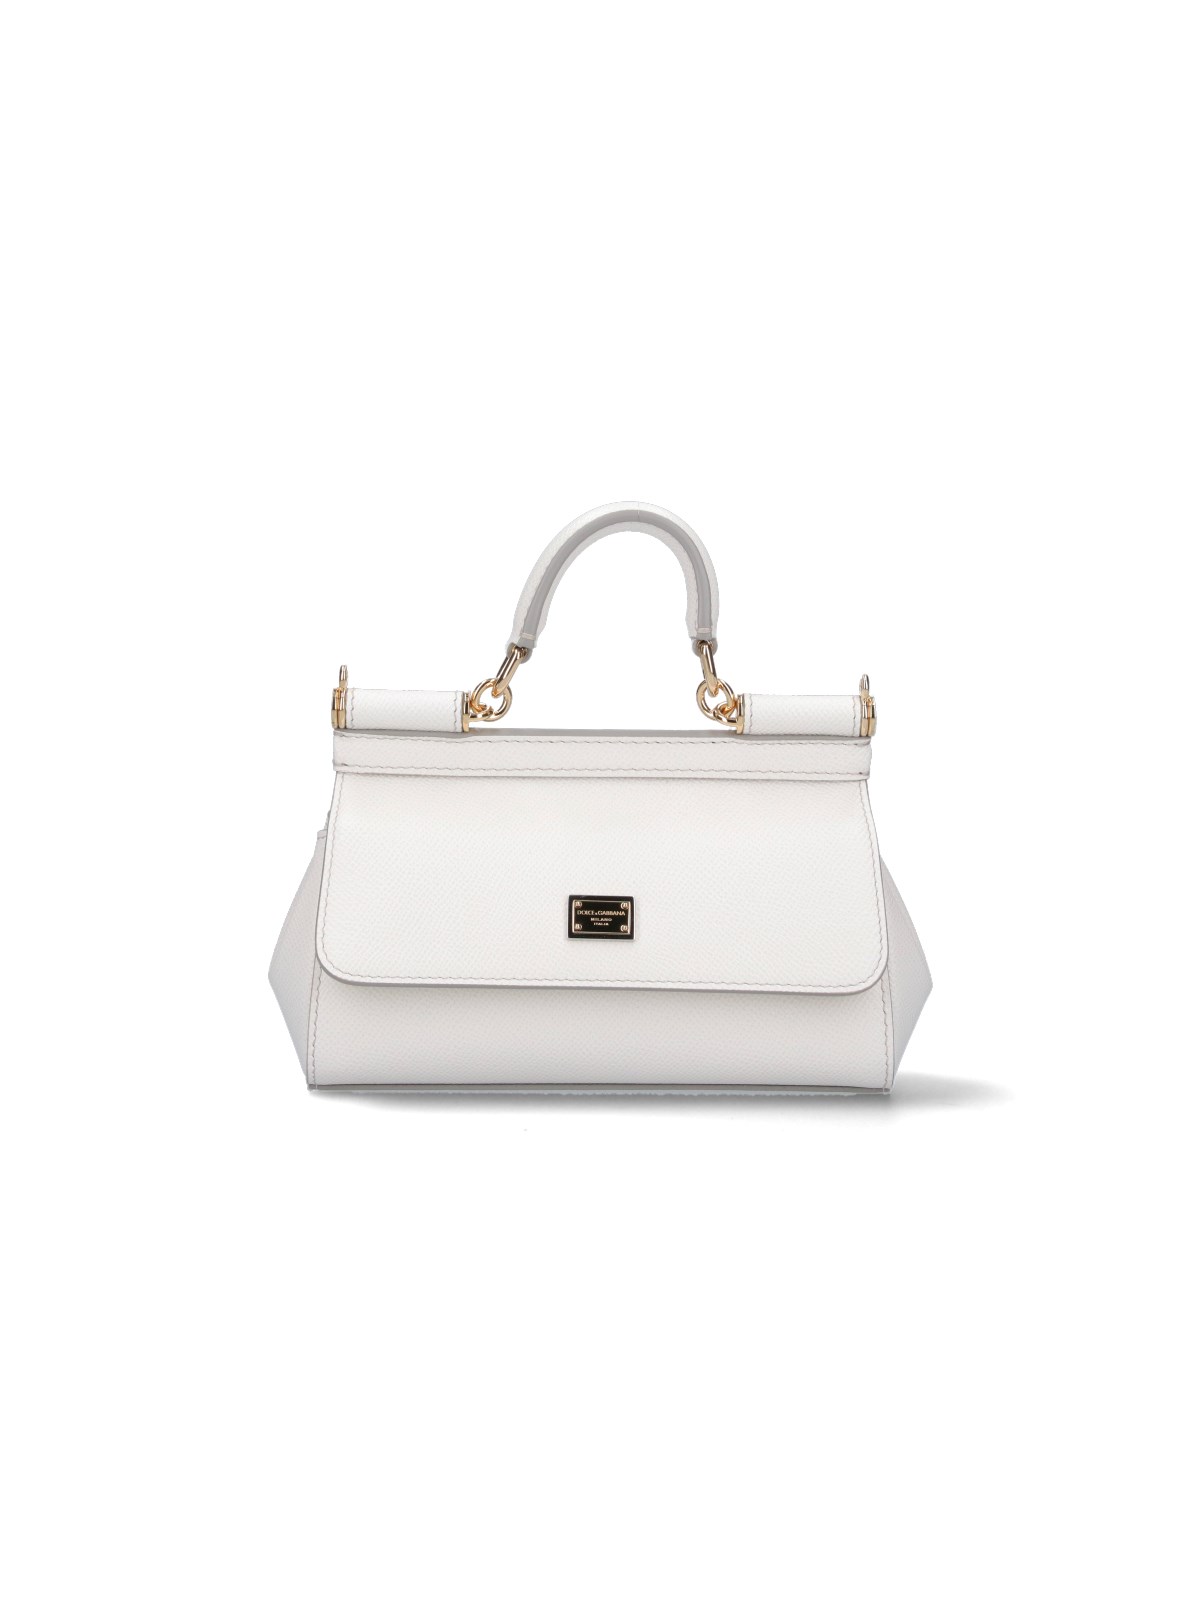 Dolce & Gabbana 'sicily' Small Bag In White